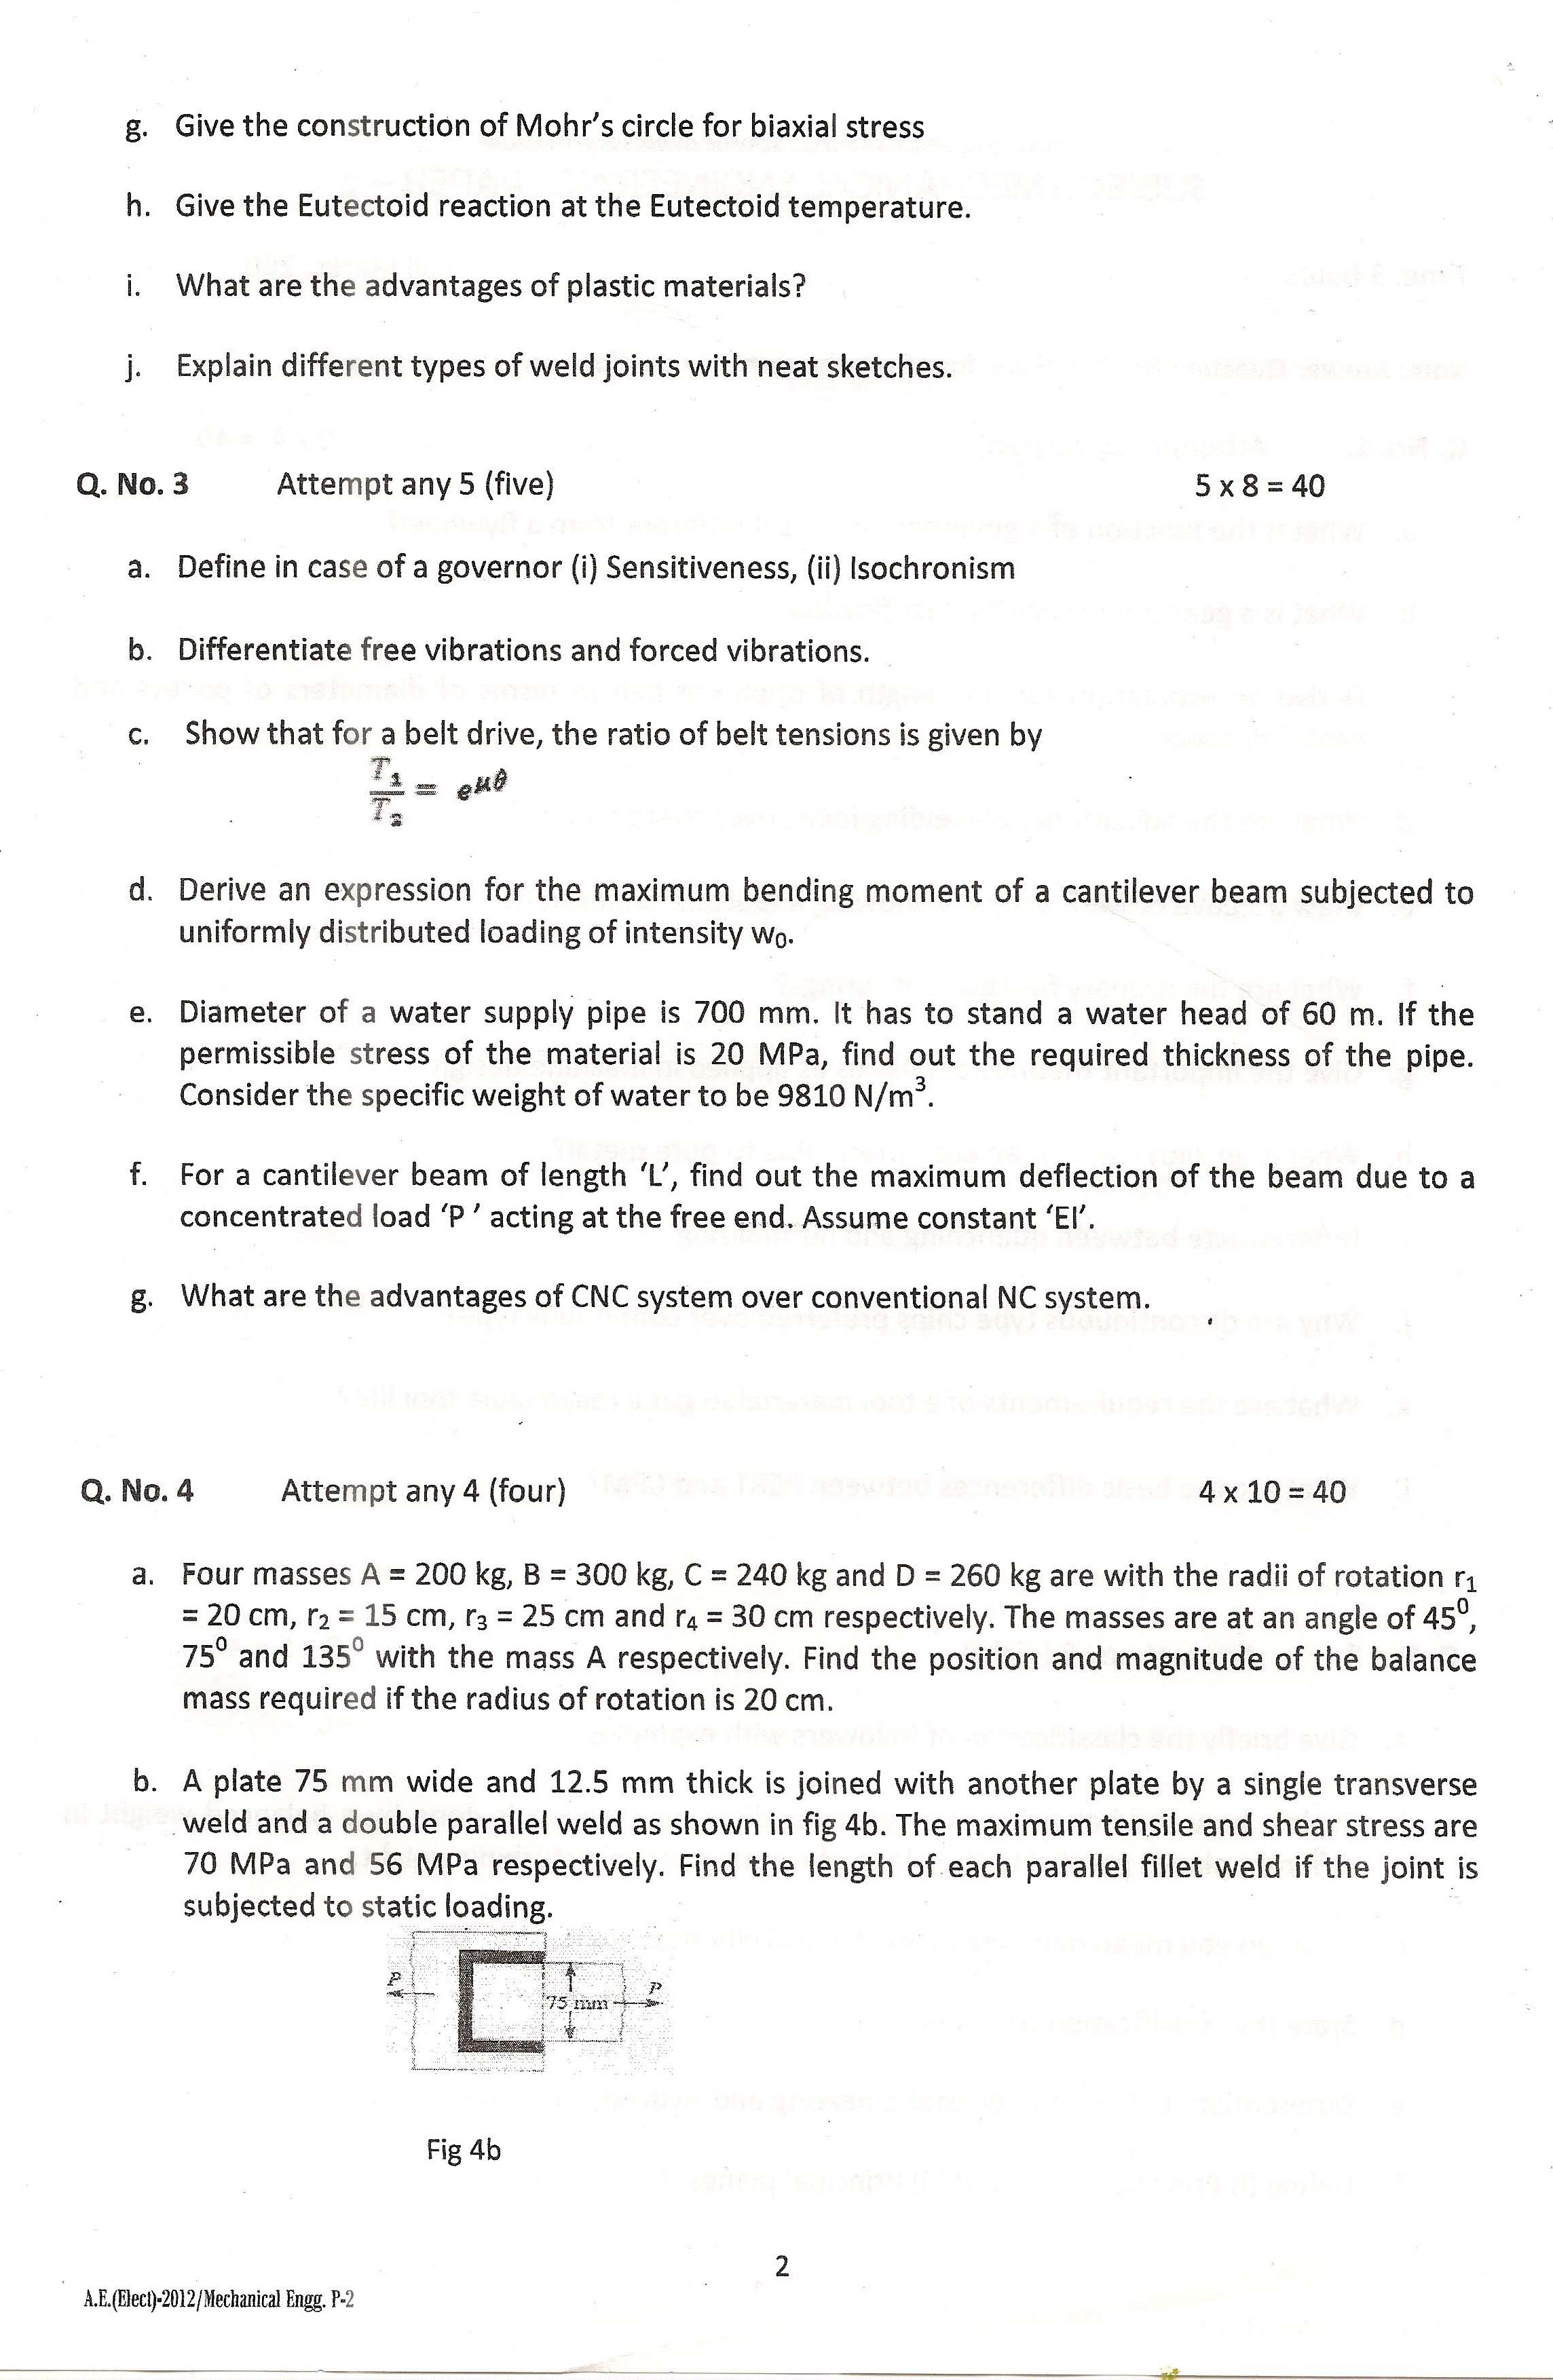 APPSC AE Electrical Exam 2012 Mechanical Engineering Paper II 2